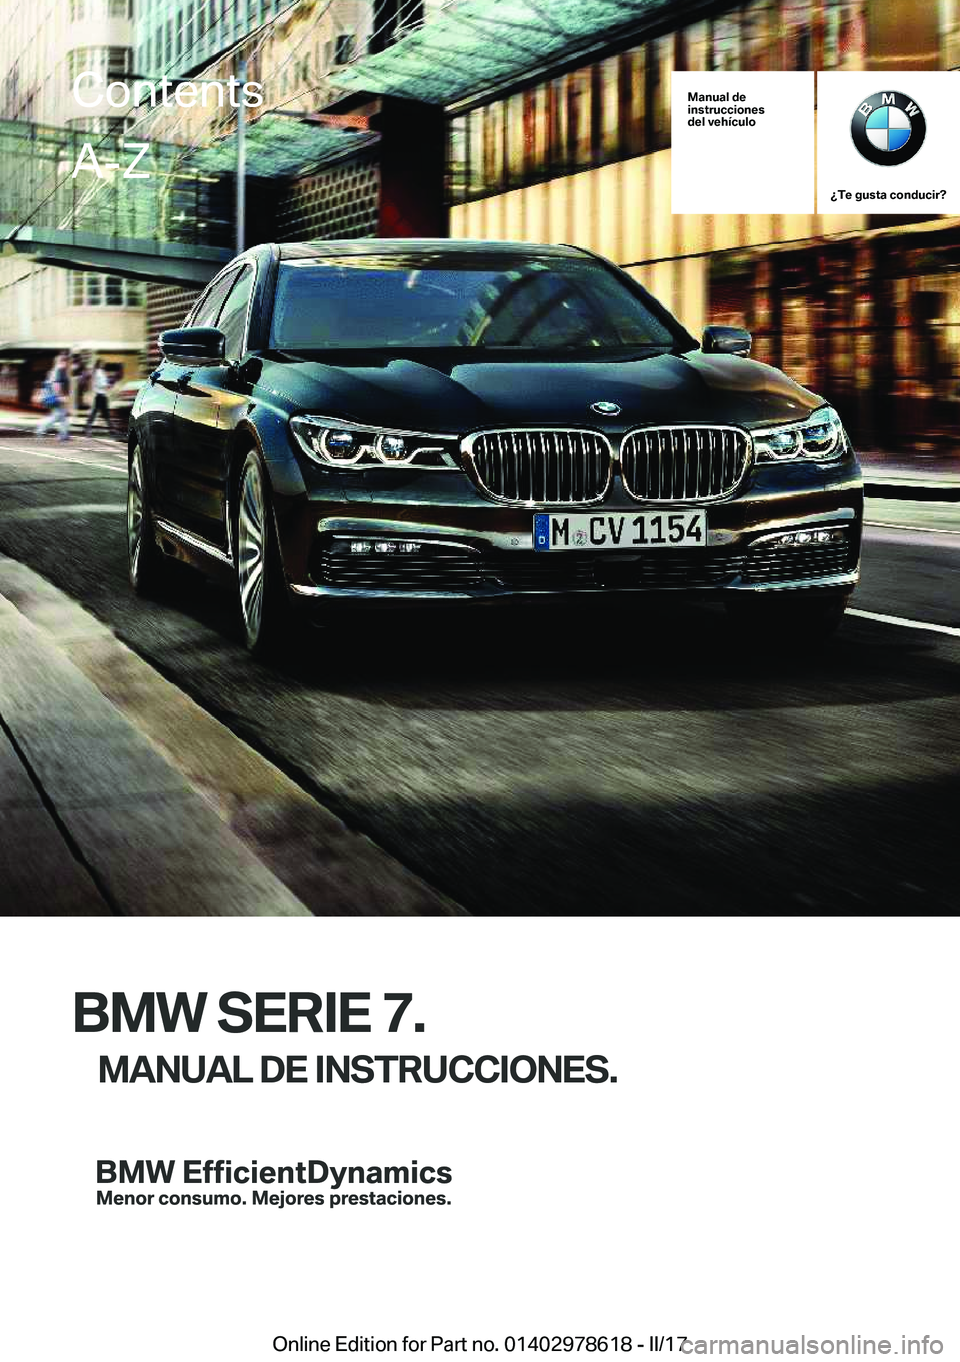 BMW 7 SERIES 2018  Manuales de Empleo (in Spanish) �M�a�n�u�a�l��d�e
�i�n�s�t�r�u�c�c�i�o�n�e�s
�d�e�l��v�e�h�